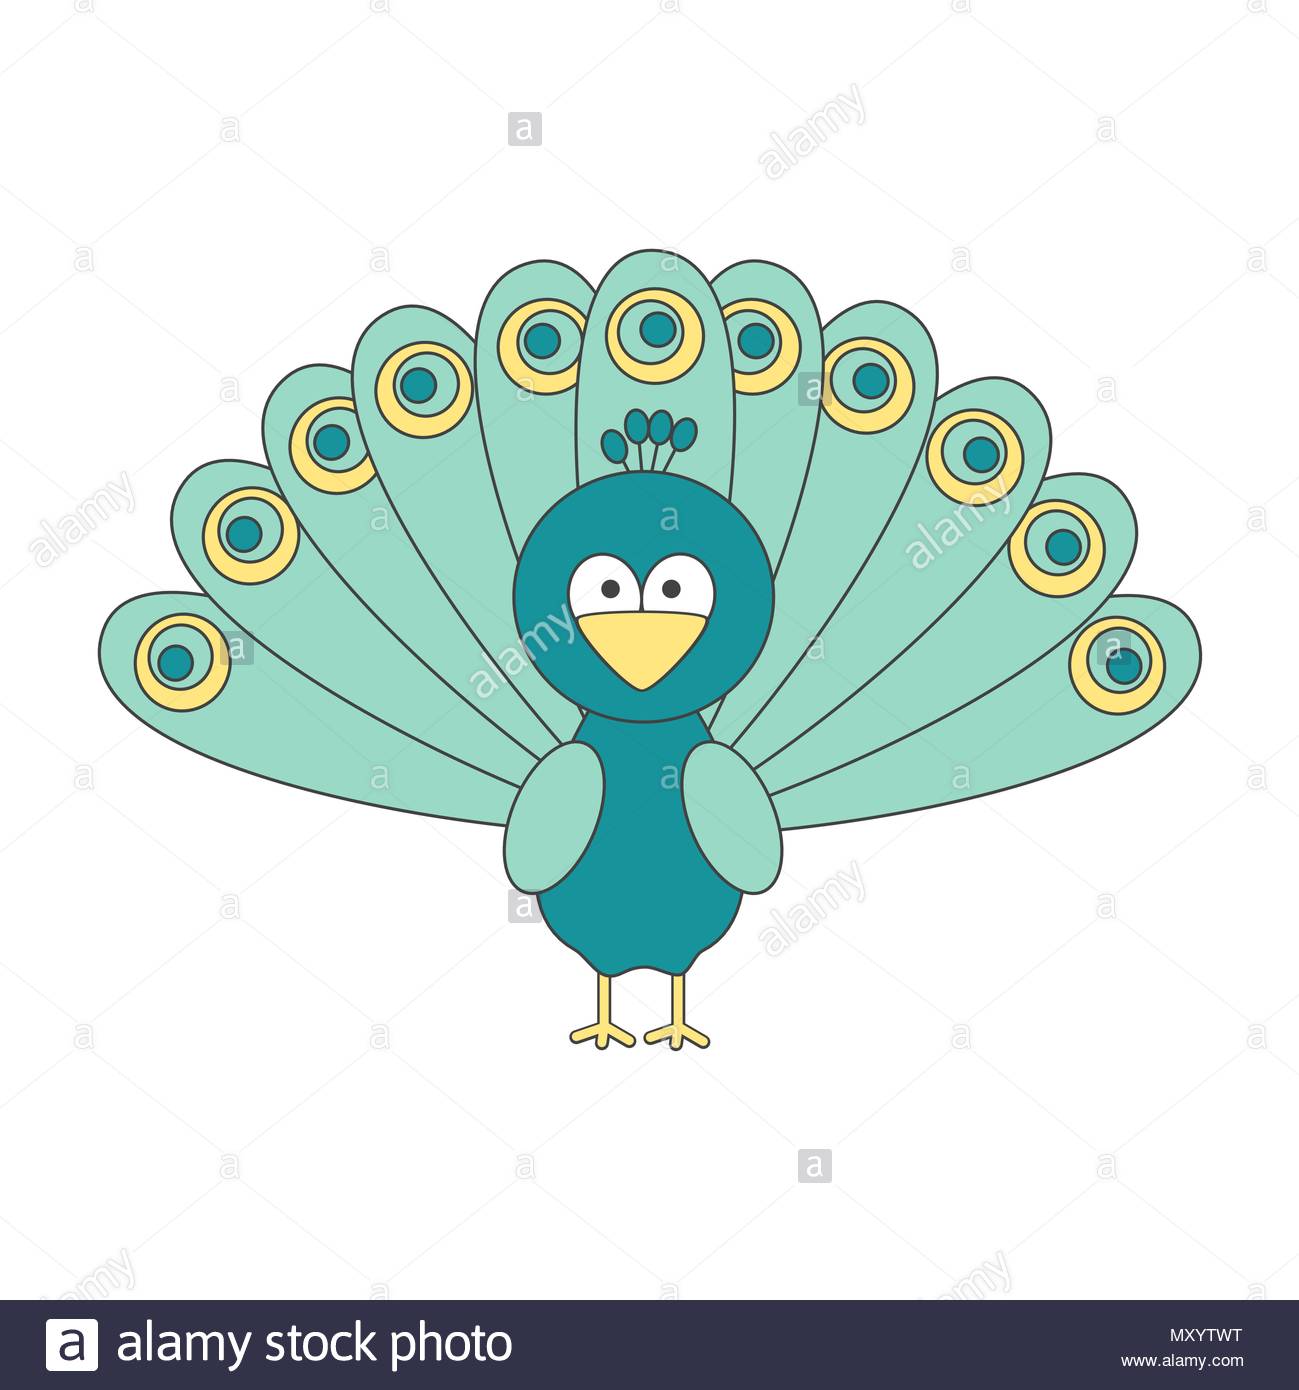 cute-cartoon-peacock-vector-illustration-isolated-on-white-background-MXYTWT.jpg